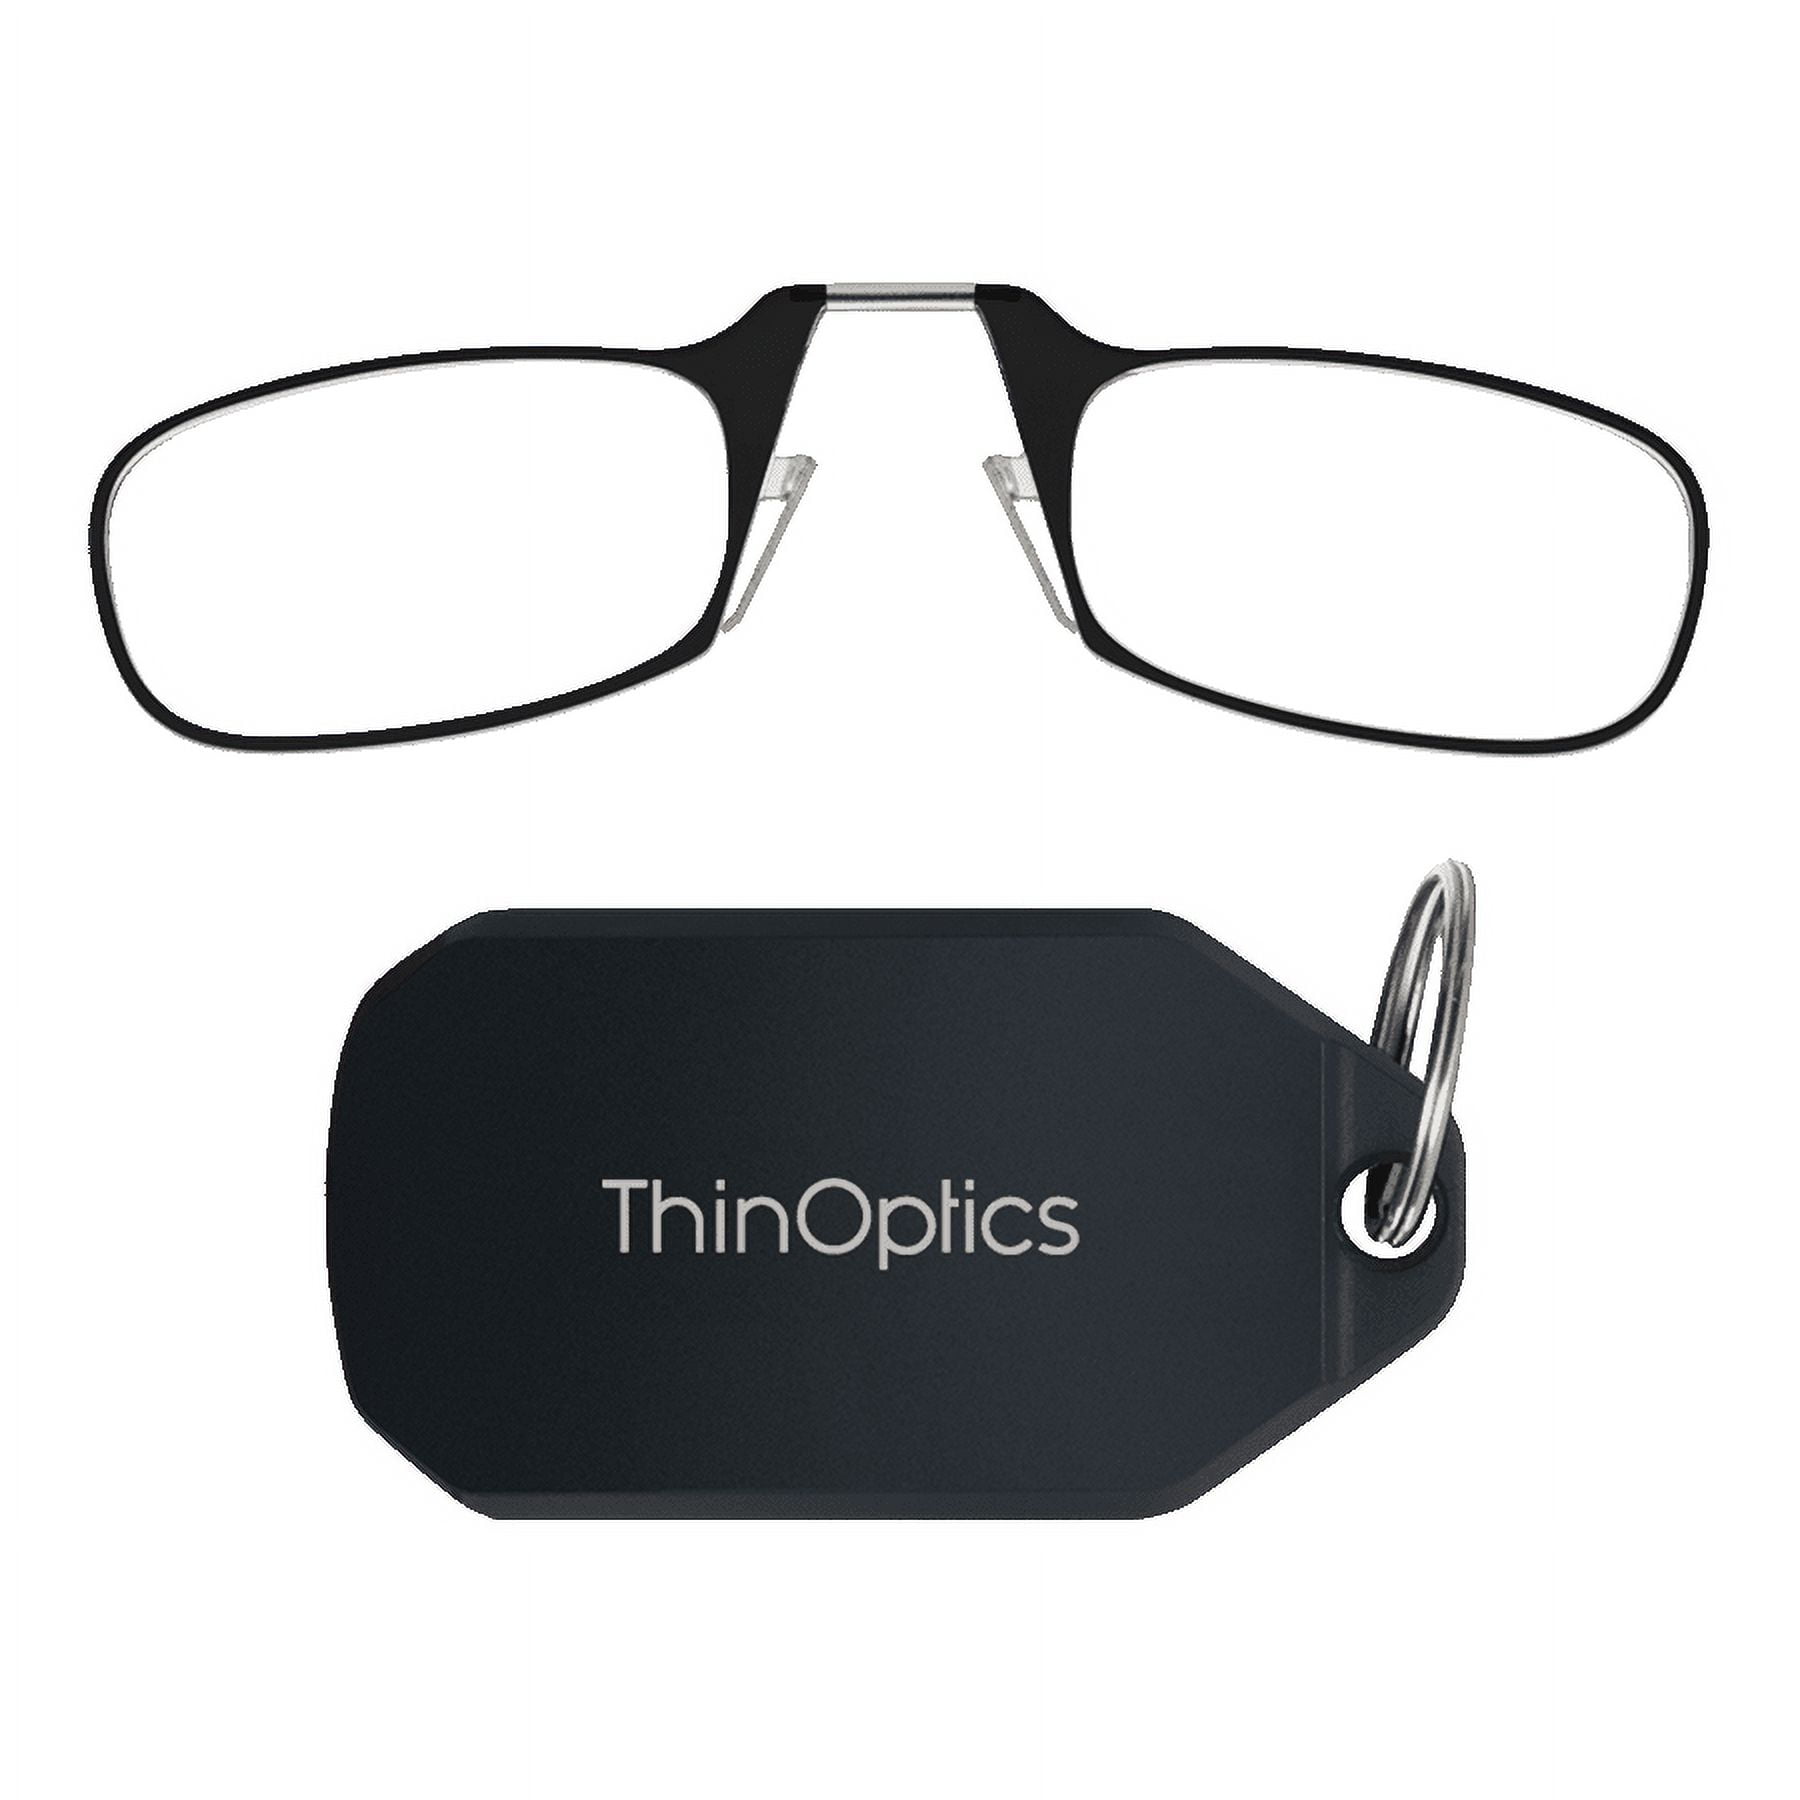 Thin Optics - +1.5 Power - Black Readers in Black + Key chain case